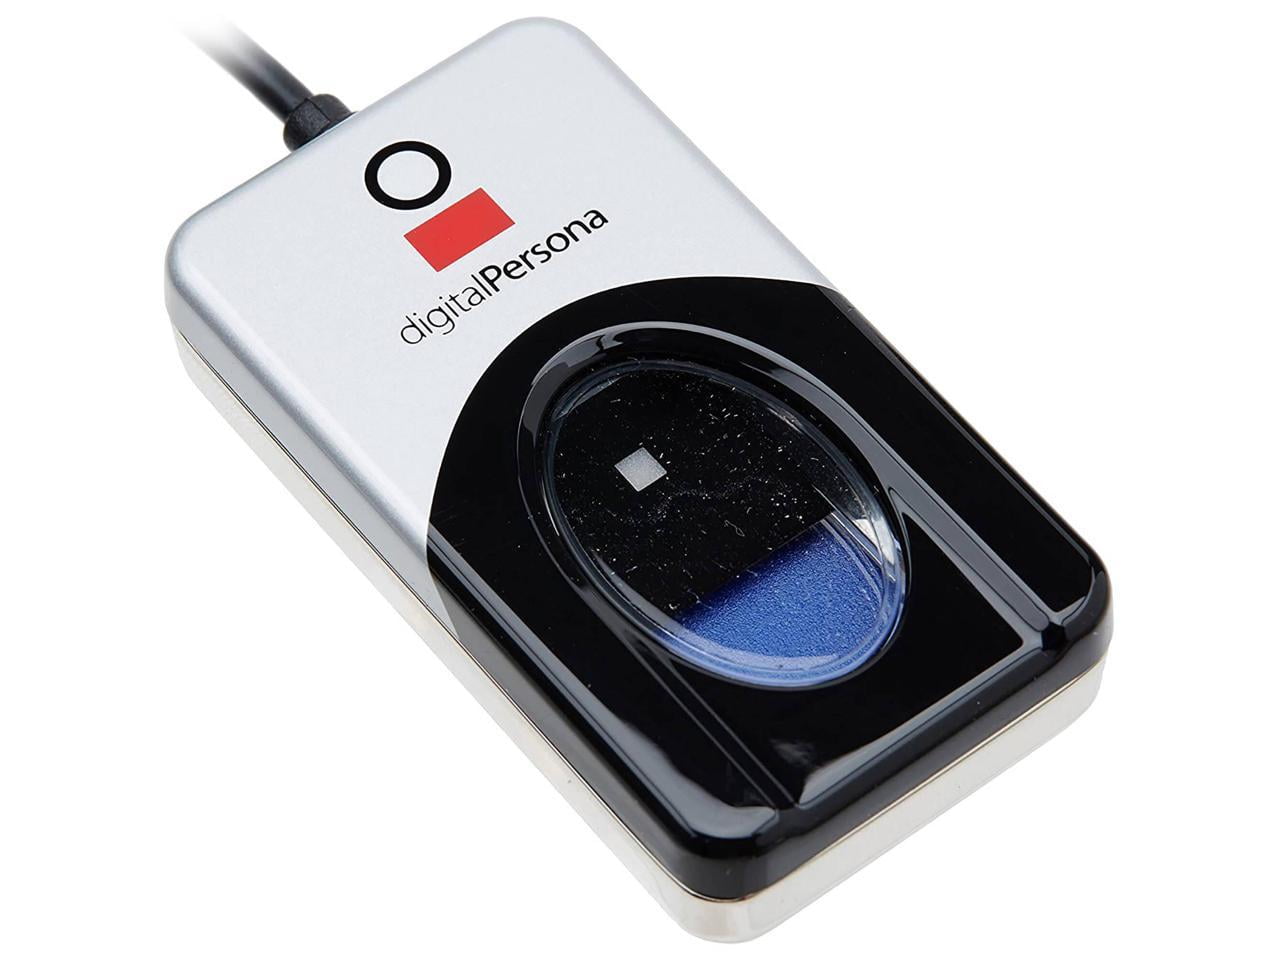 Picture of Digital Persona 88003-001-S04 4500 Optical Fingerprint Reader